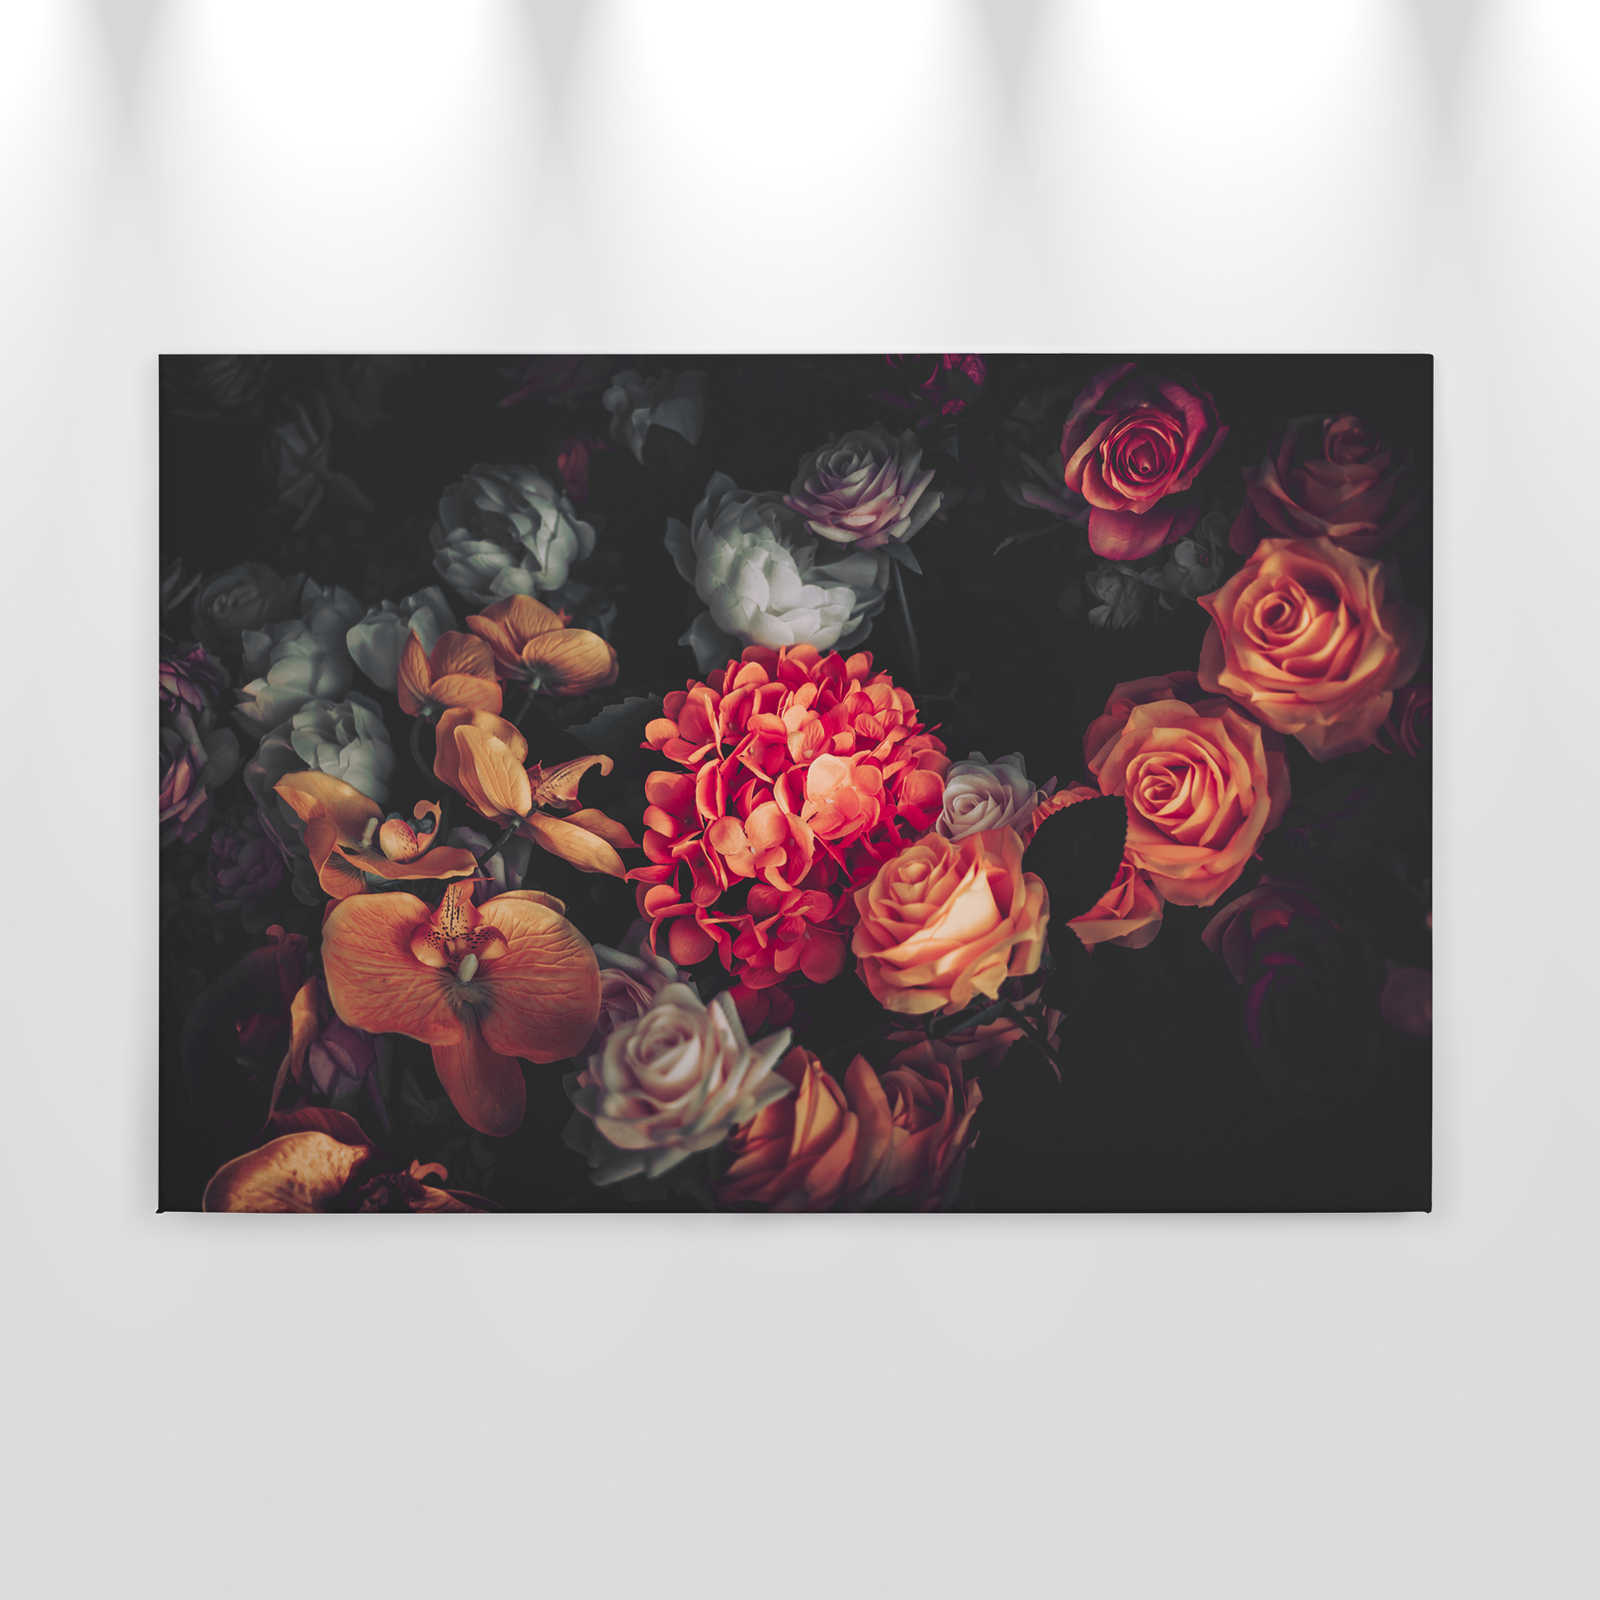             Tela con bouquet di rose - 0,90 m x 0,60 m
        